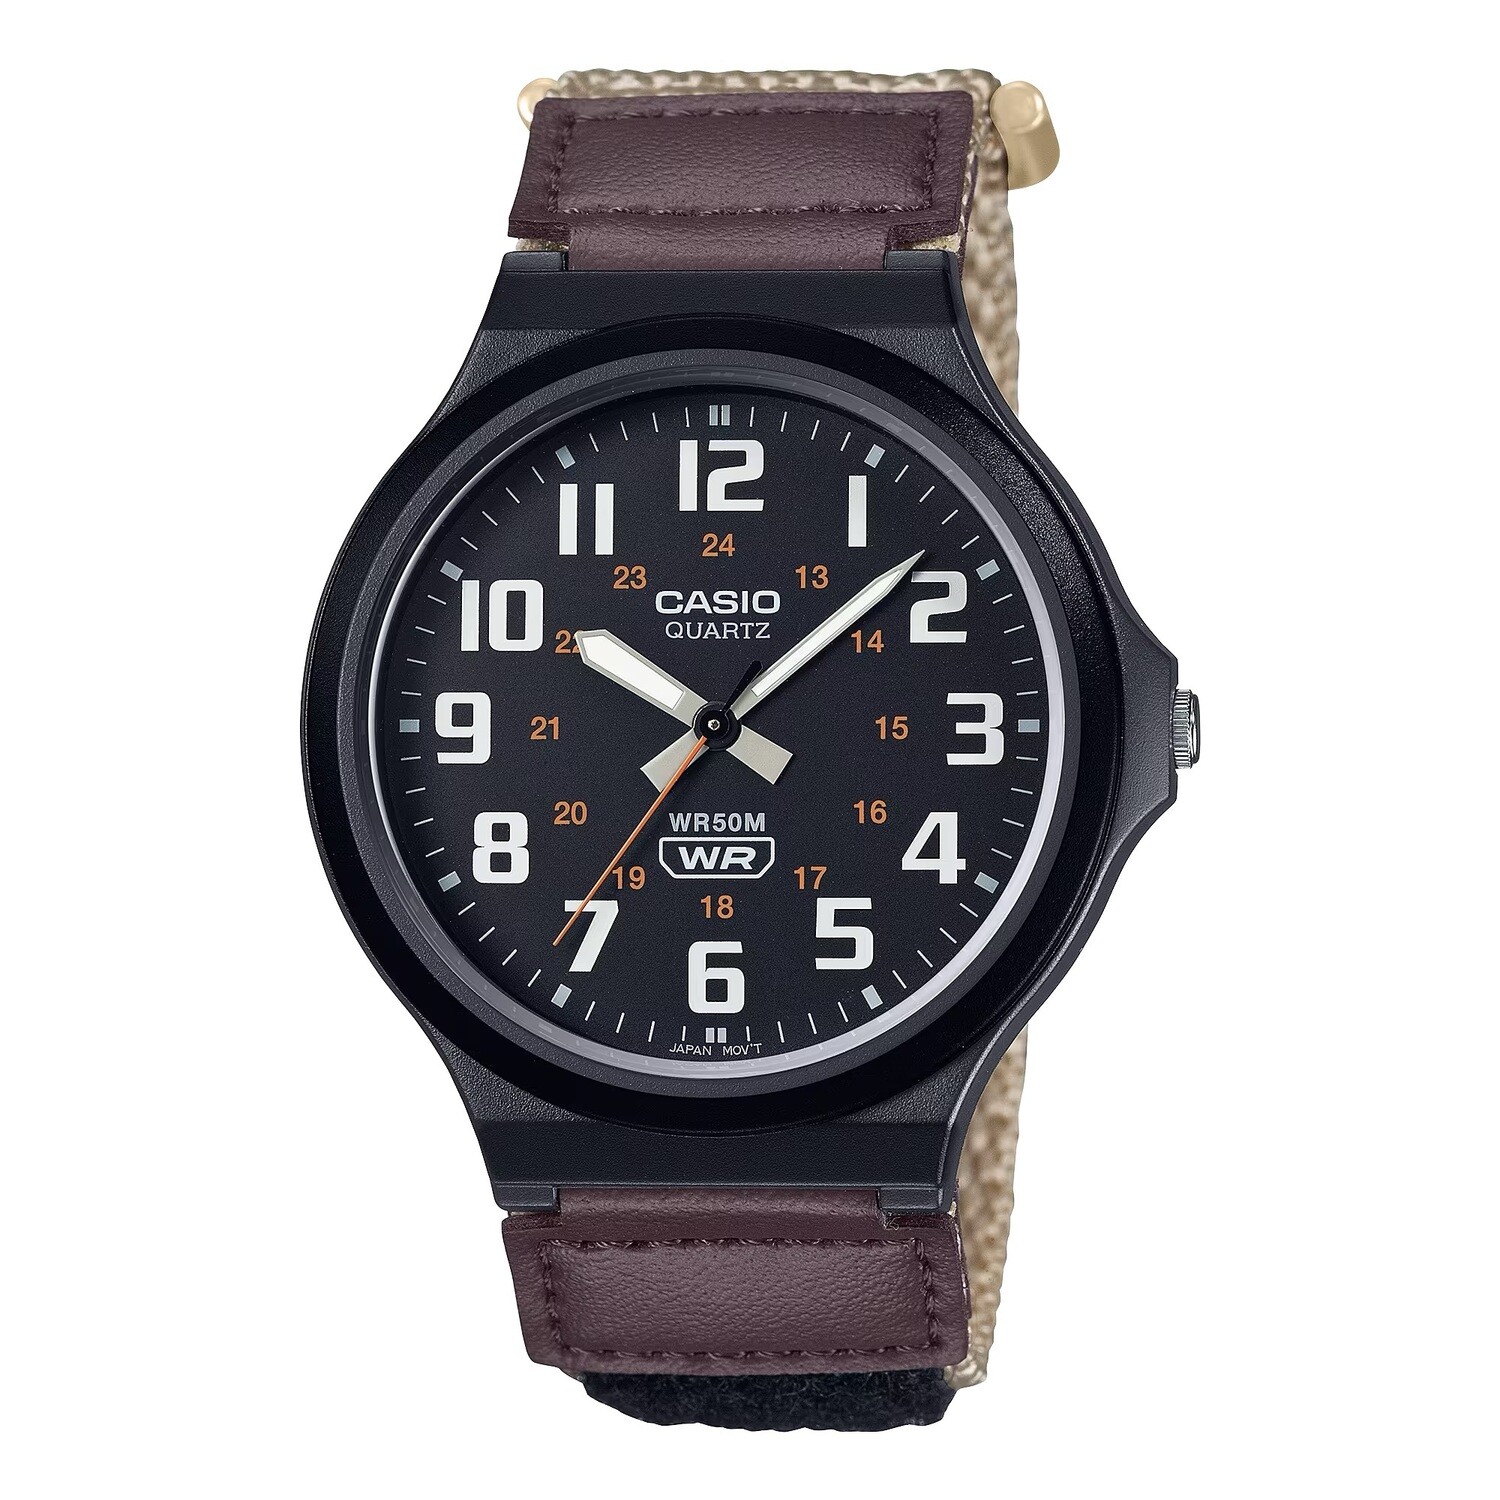 Casio MW-240B-5BV 43.6mm 50m WR fabric strap military sport watch for men